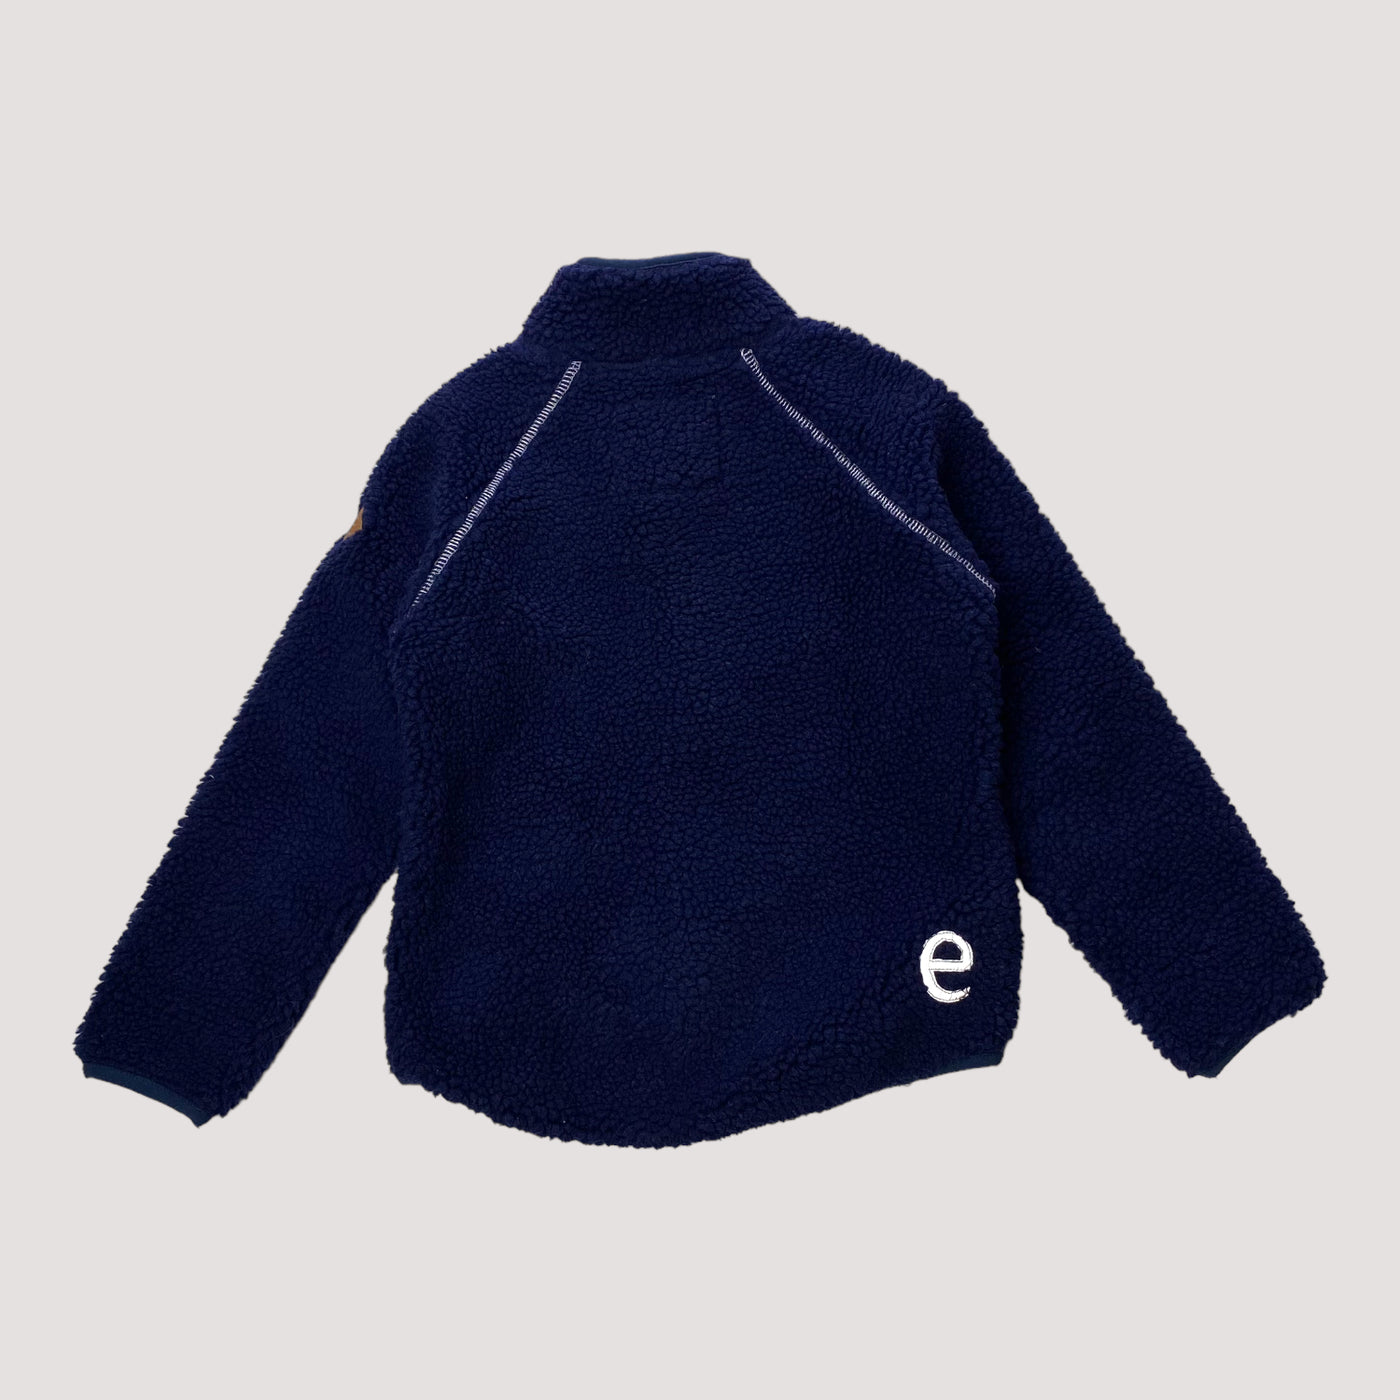 Ebbe fleece jacket, dark blue | 110cm